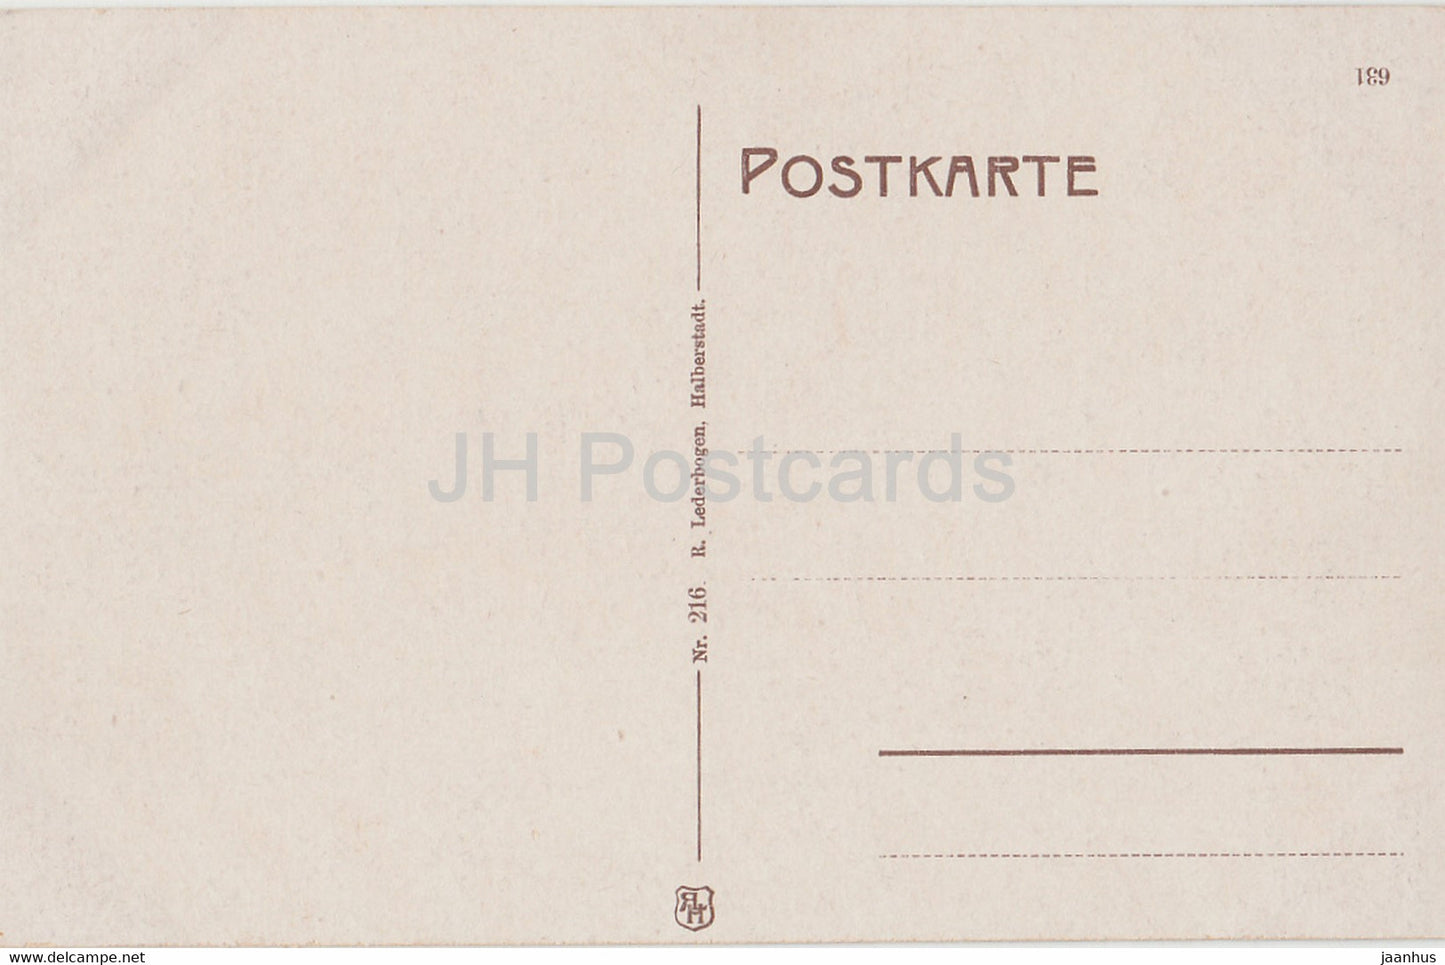 Harz - Ottofelsen - 216 - carte postale ancienne - 1912 - Allemagne - inutilisée